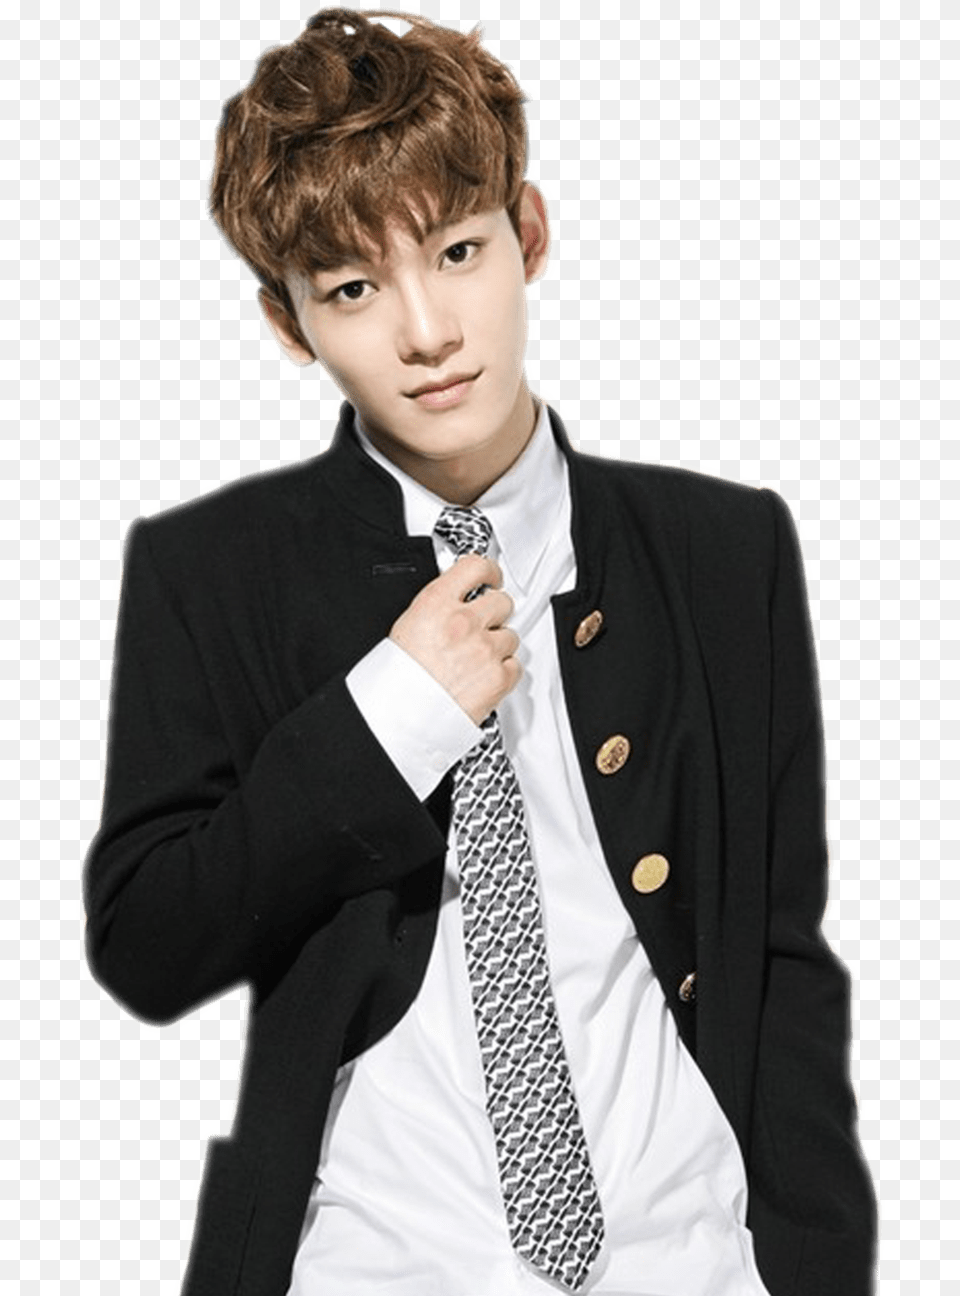 Exo Chen Grey Tie Clip Arts Exo Tao And Chen, Accessories, Suit, Necktie, Jacket Free Png